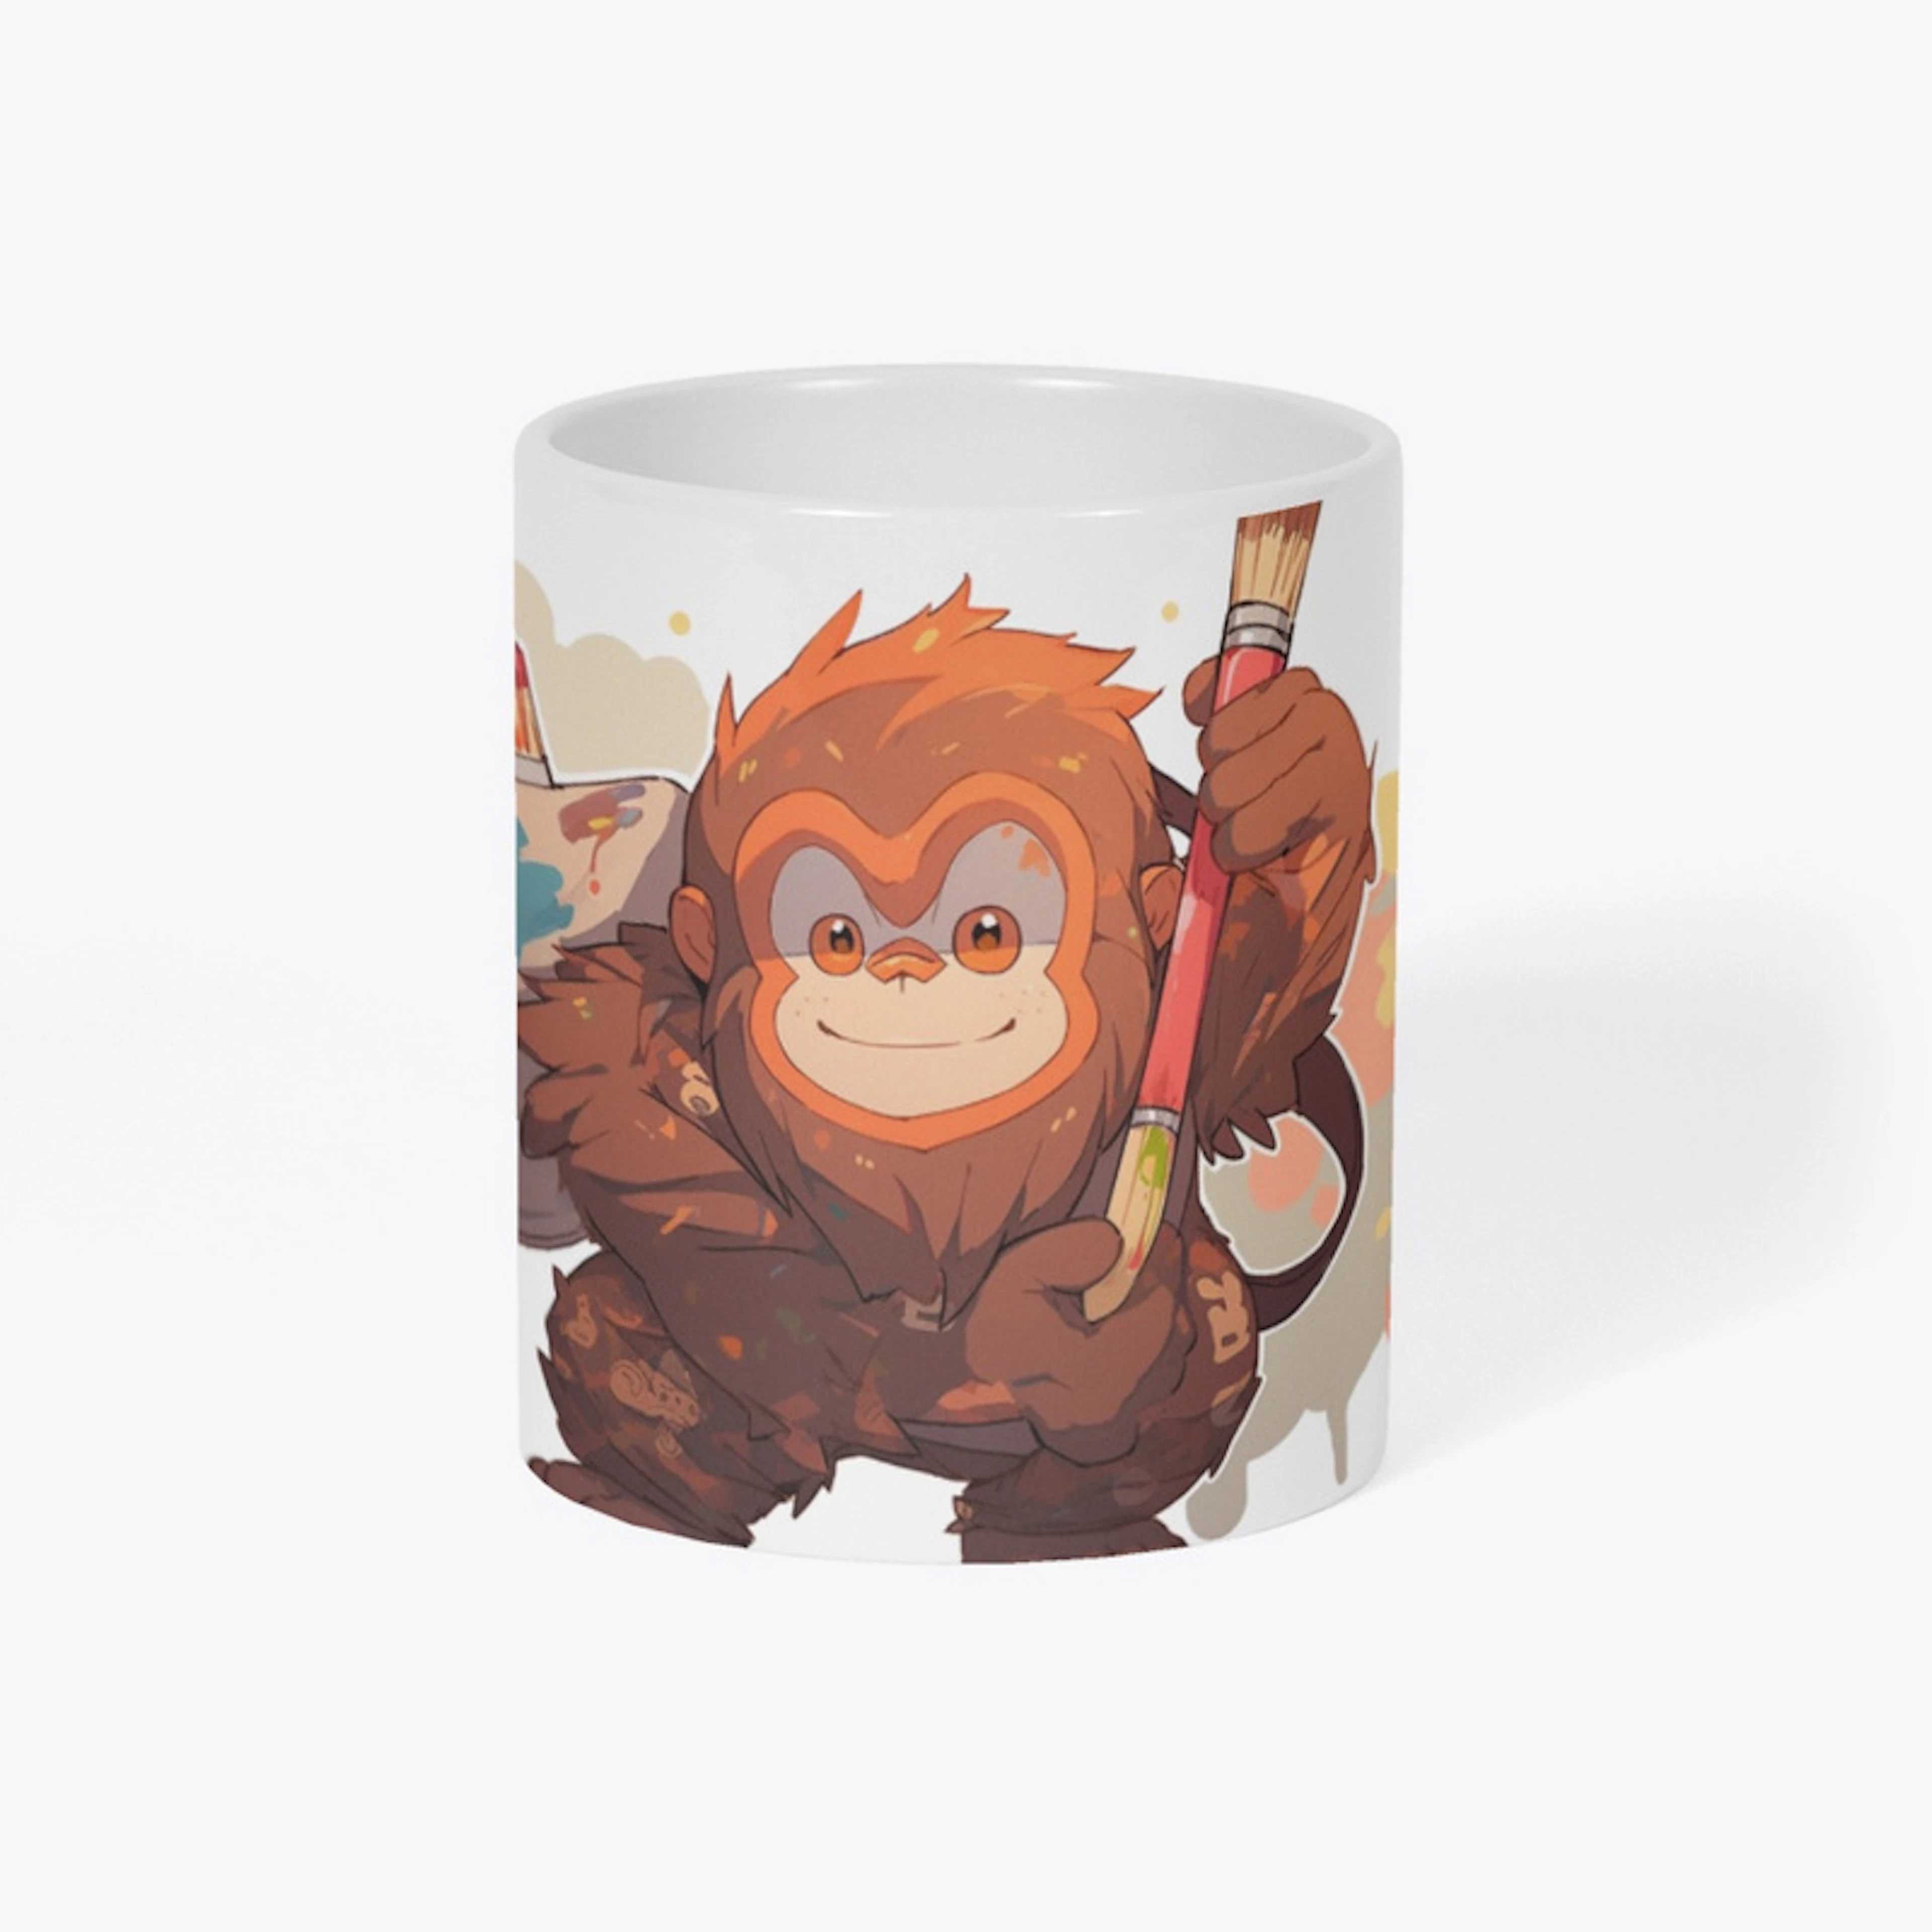 Messy Monkey Mug - A Creative Sip!